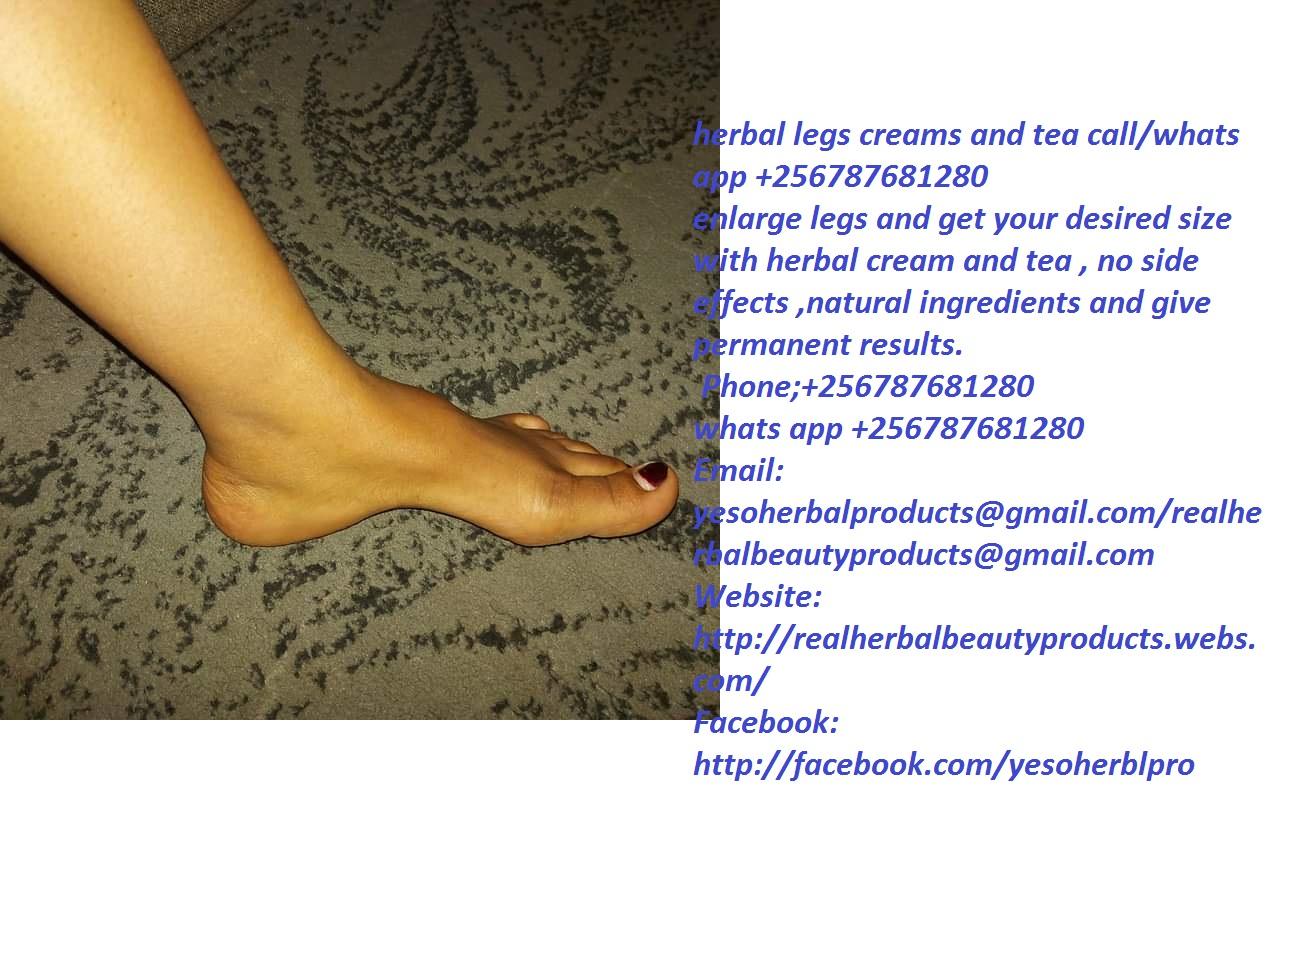 Call/whats app +256777422022 for herbal legs enlargement 